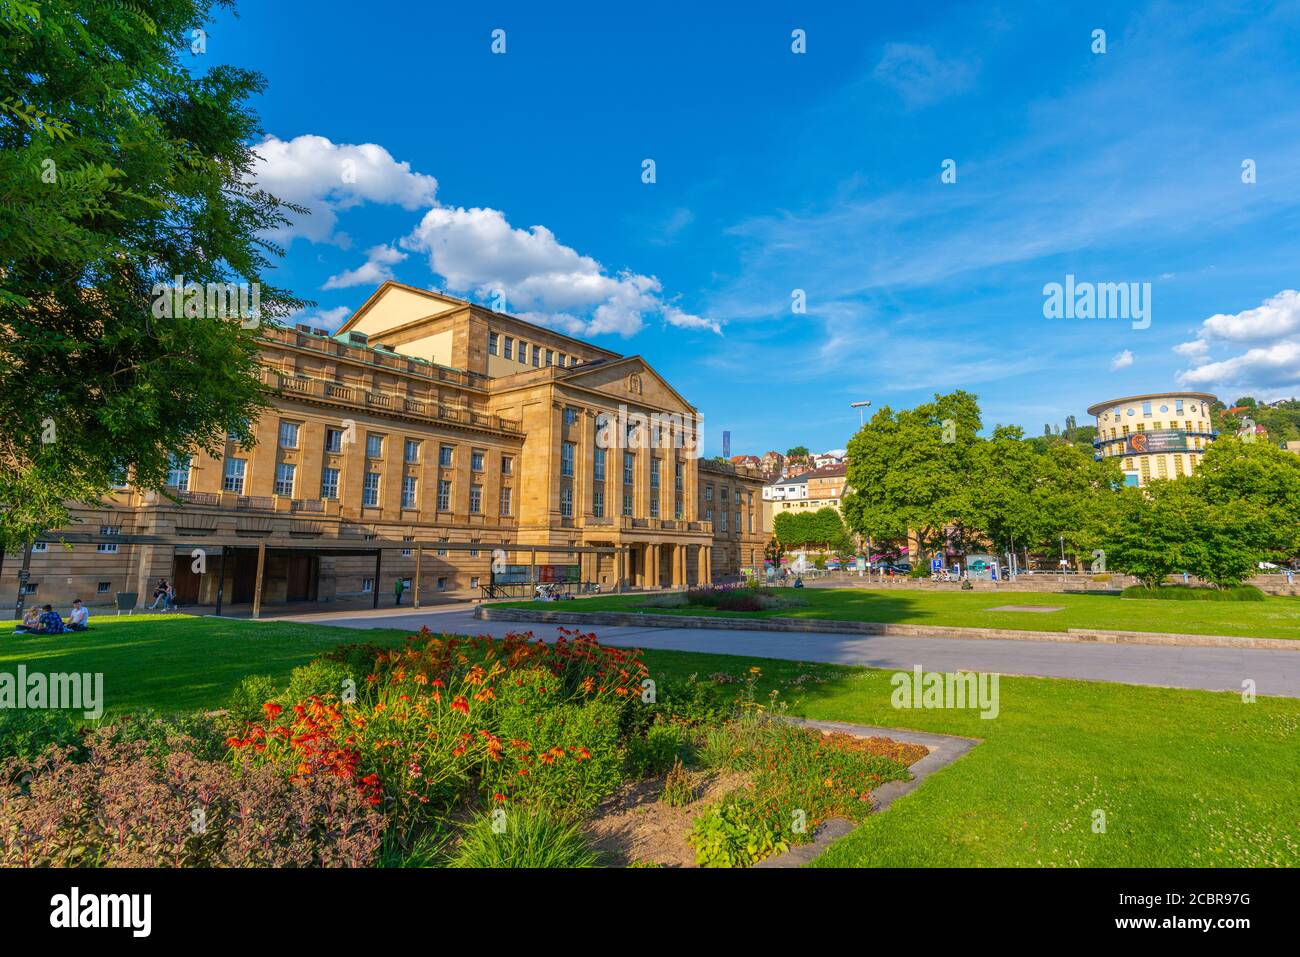 Teatro de la Ópera en Oberer Schlossgarten o Upper Castle Garden, Stuttgart, Estado Federal de Baden-Württemberg, Alemania del Sur, Europa Foto de stock